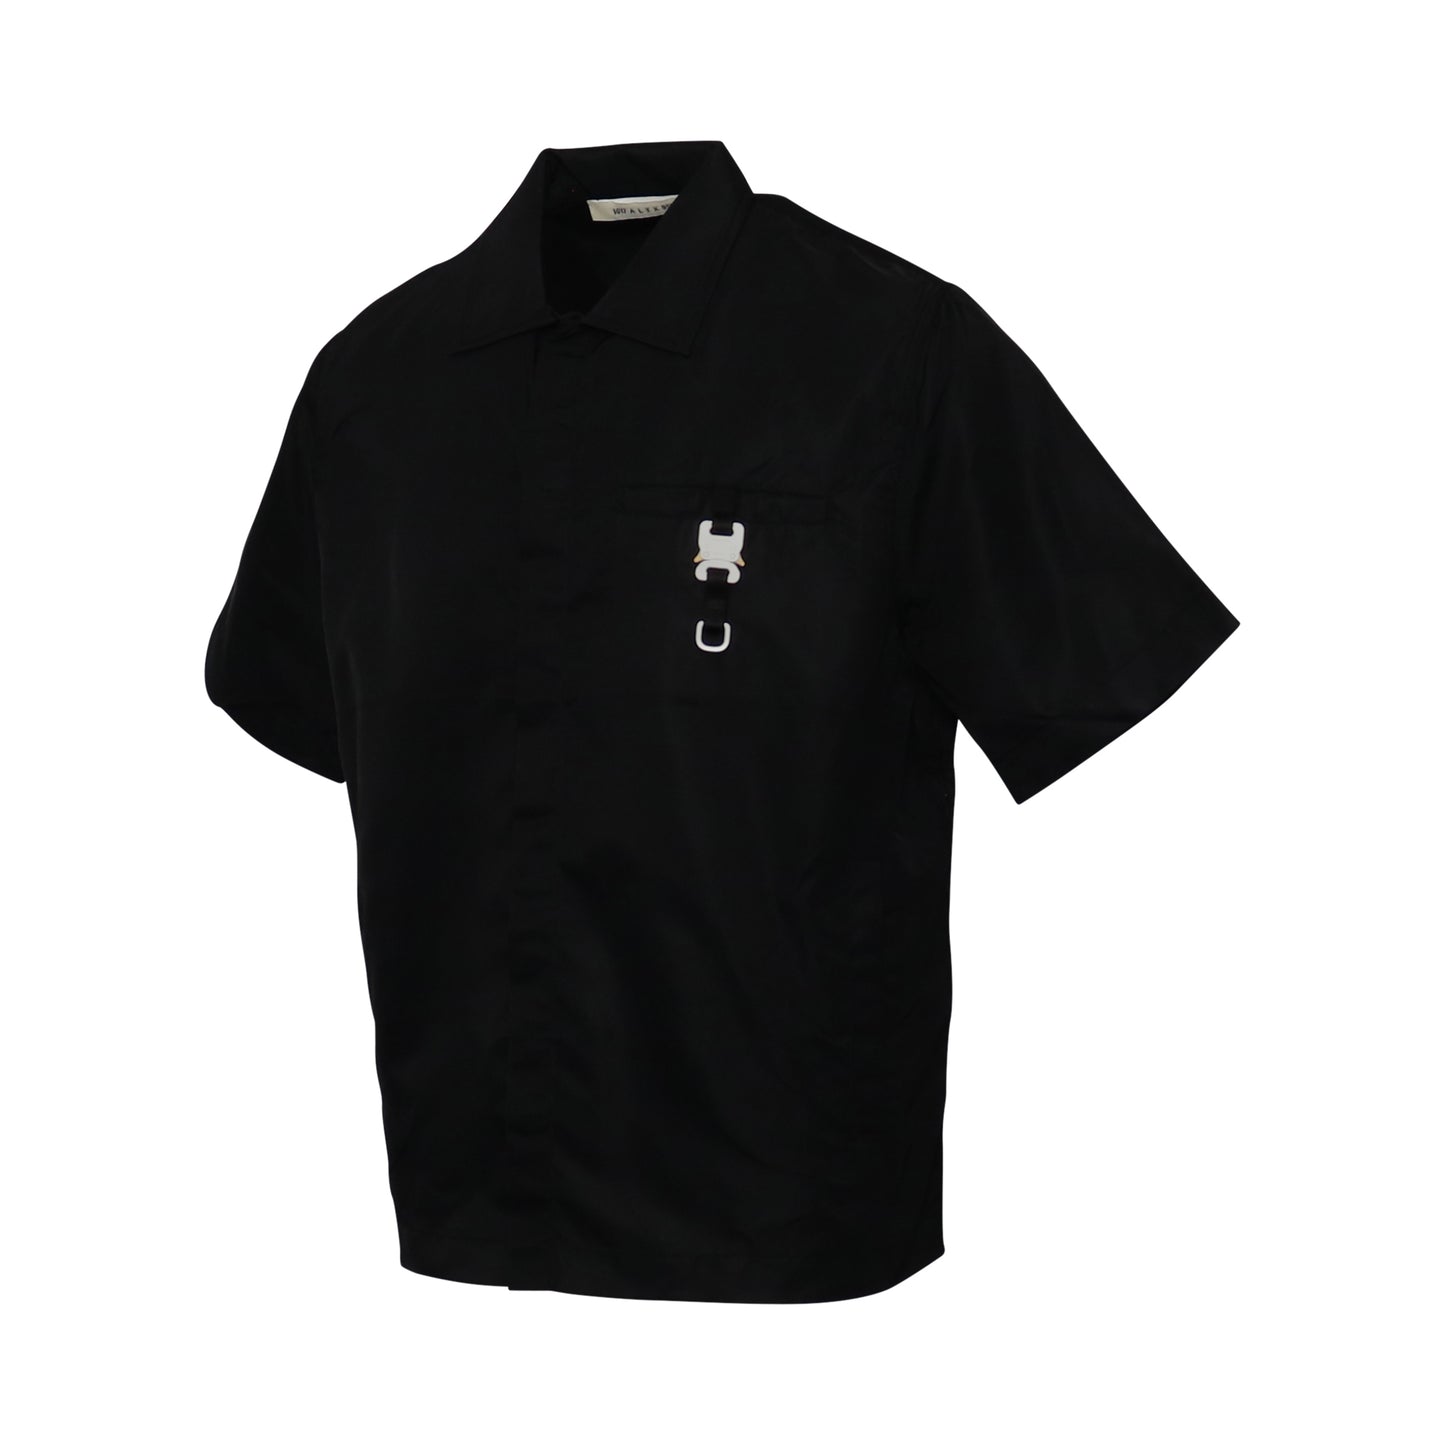 Rollercoaster Short Sleeve Shirt in Black